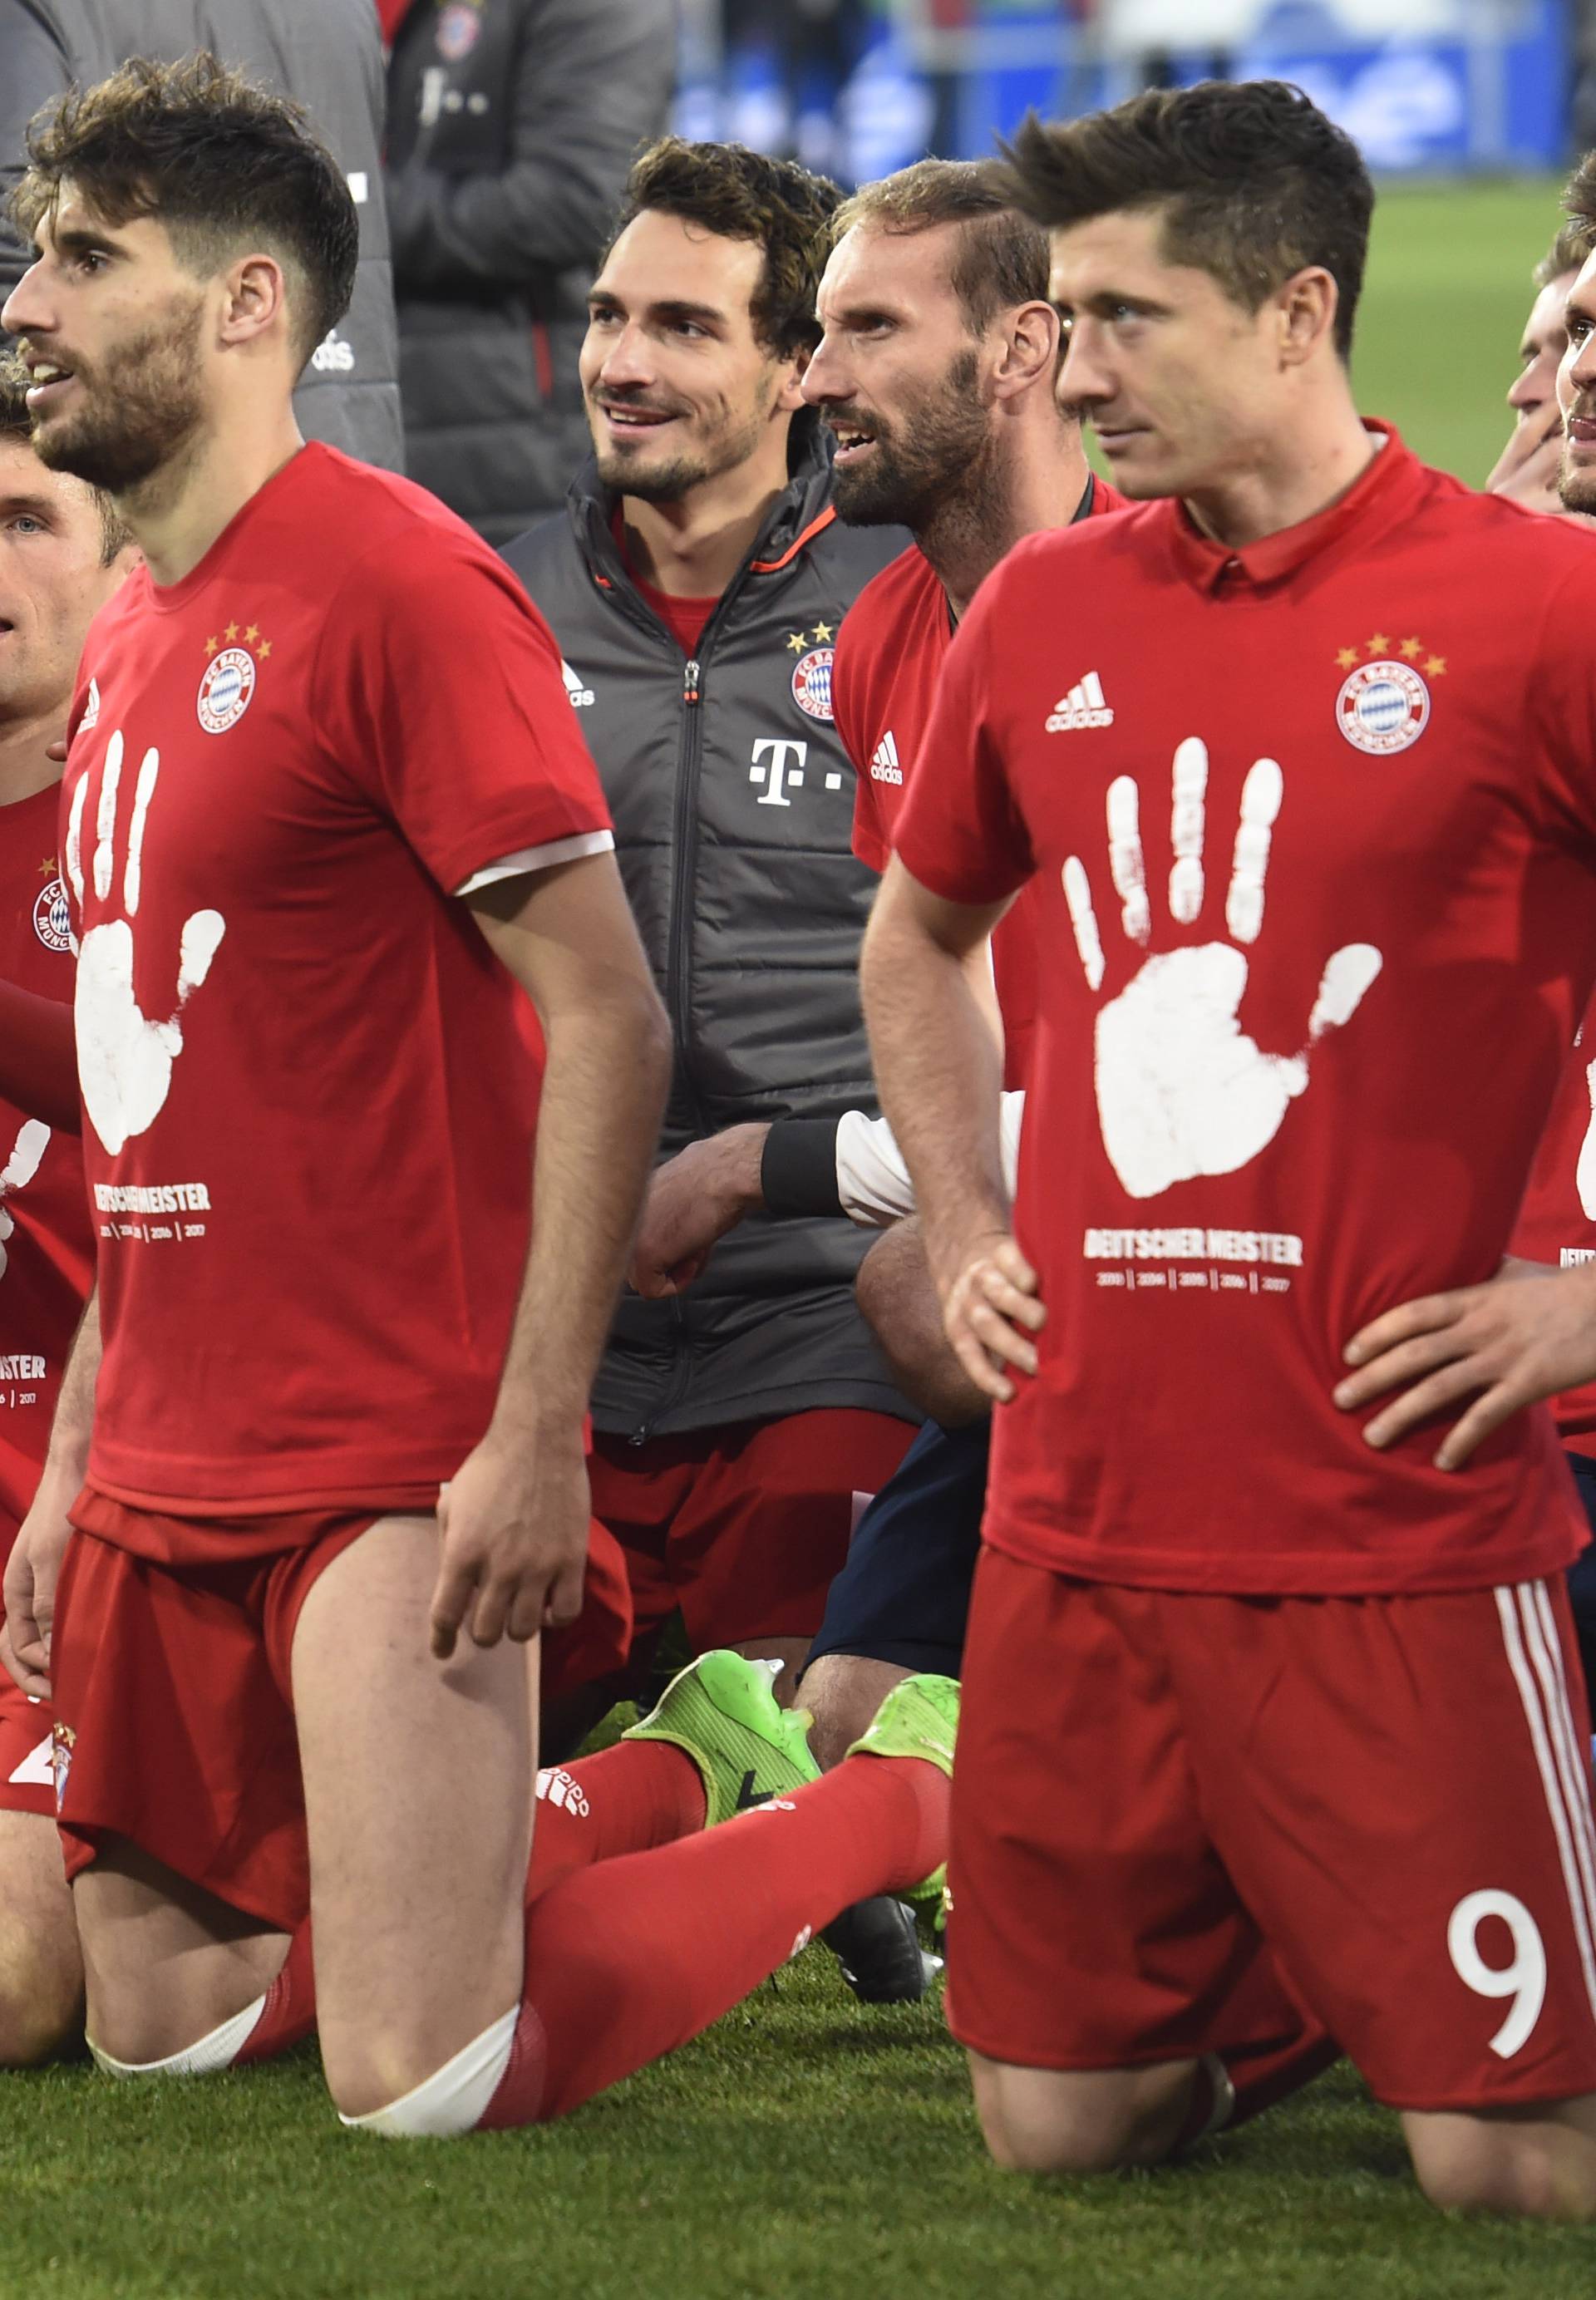 Bayern Munich's players celebrate after the match  after winning the Bundesliga